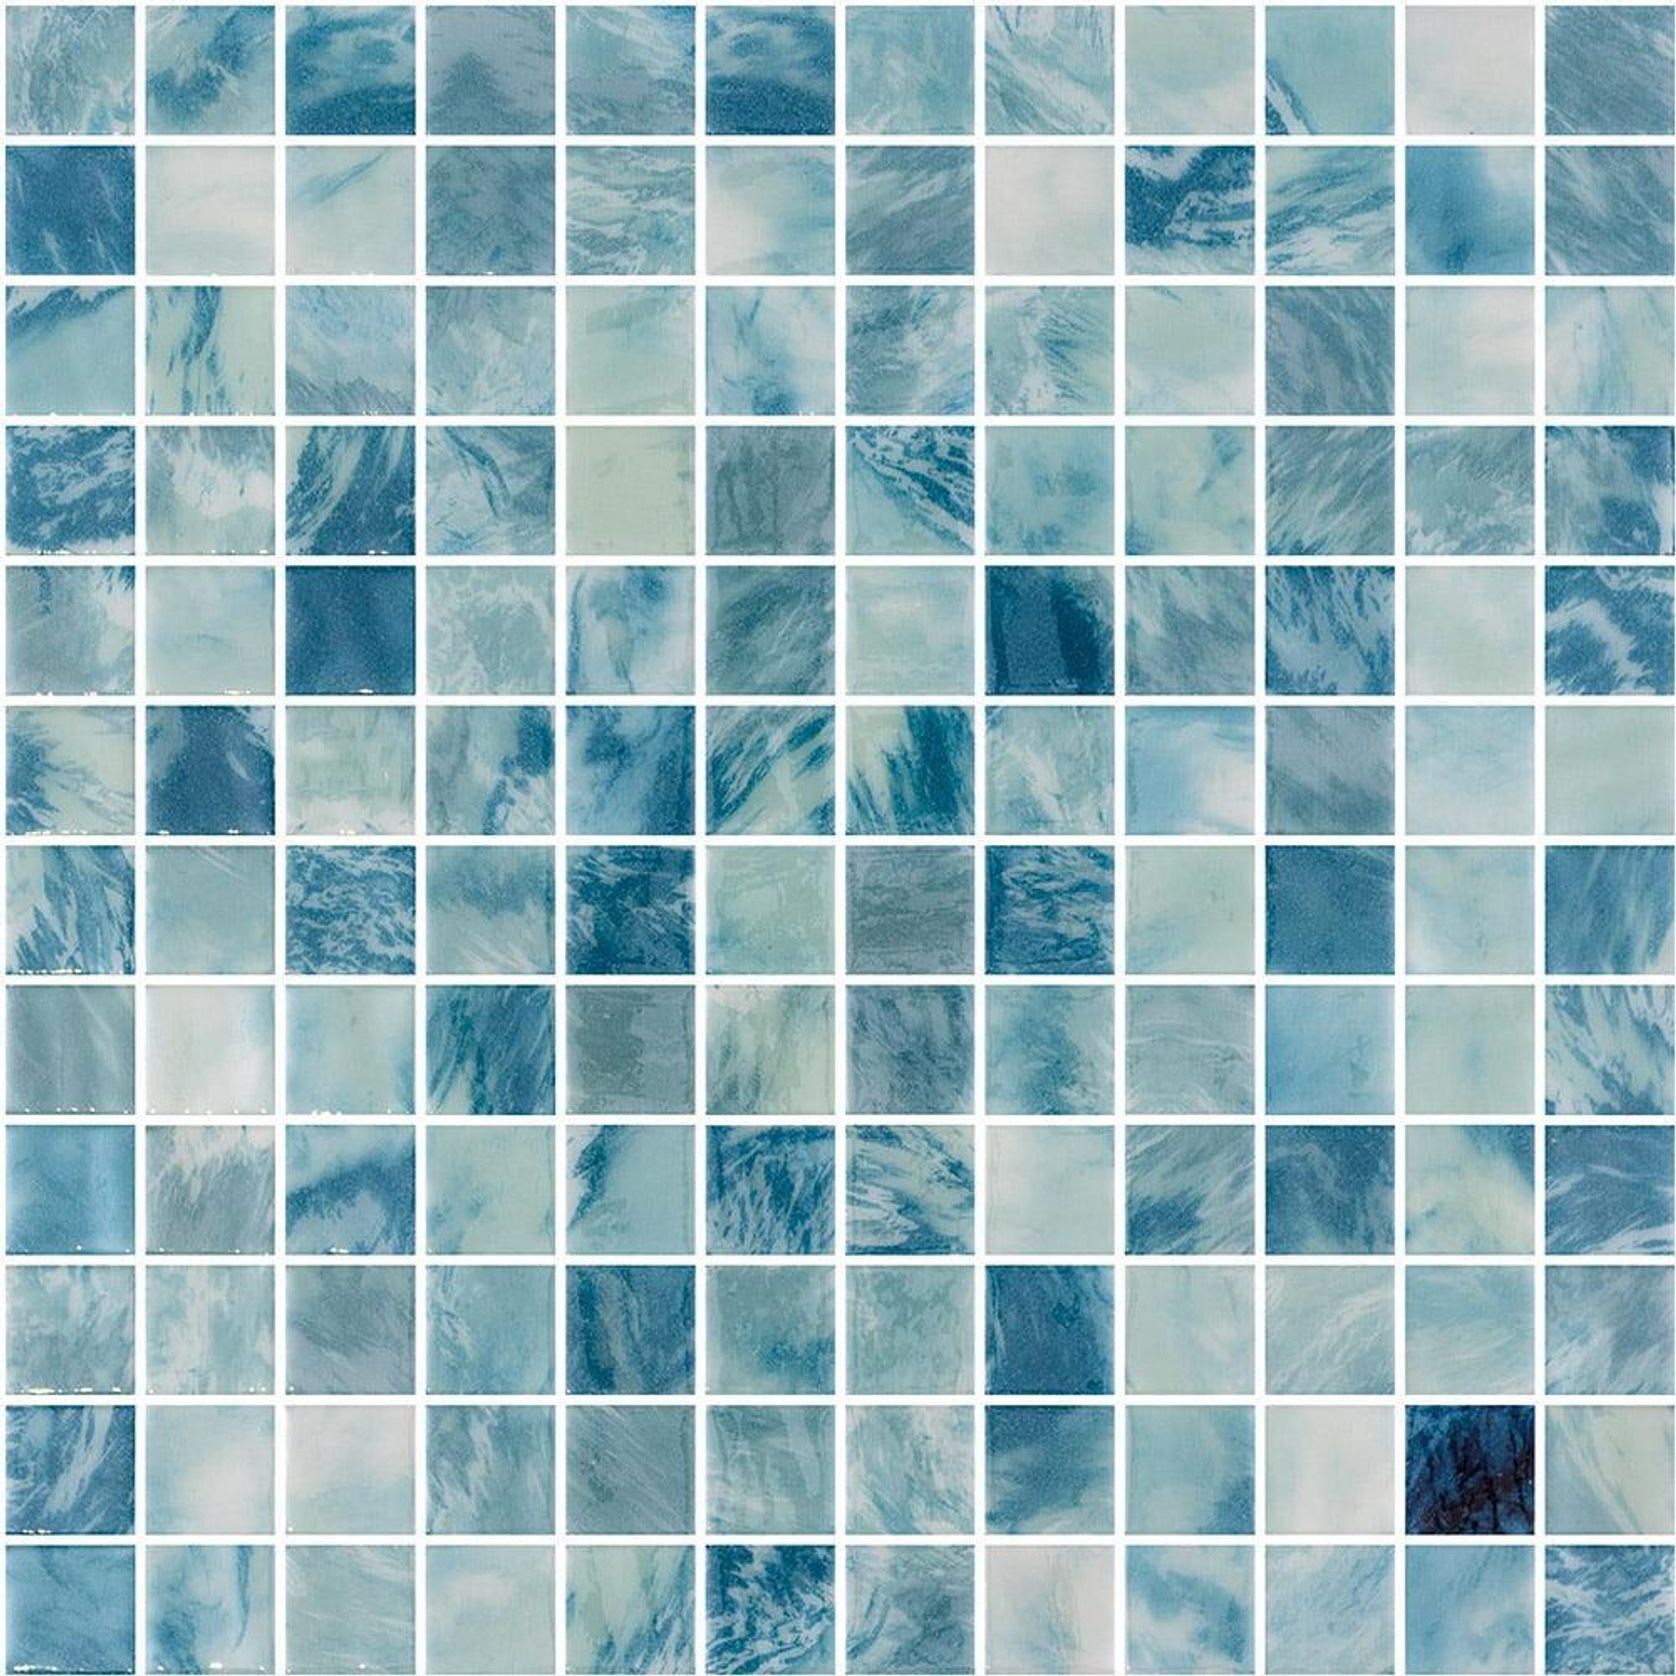 Maroubra Glass Pool Mosaics gallery detail image